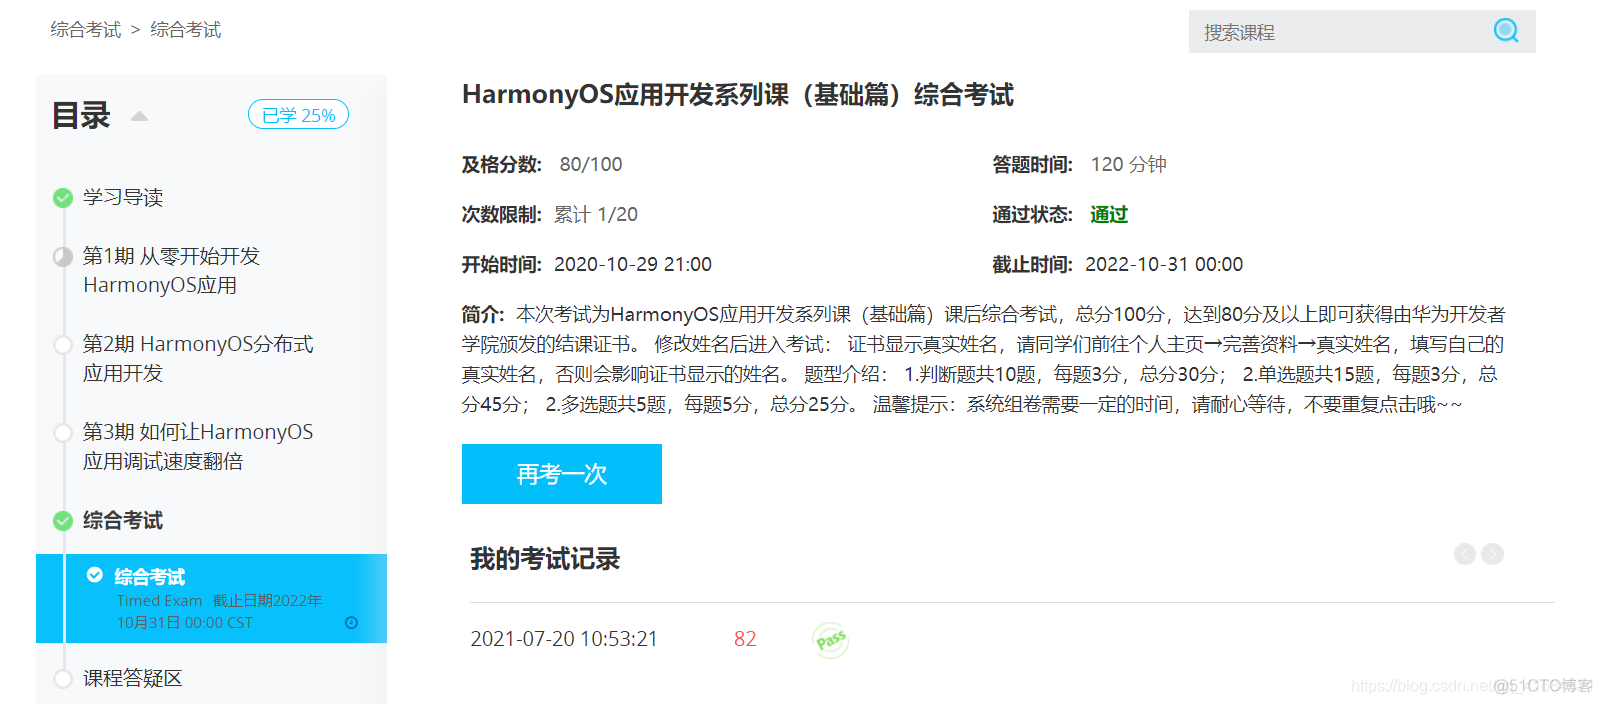 HarmonyOS开发初级证书_HarmonyOS开发课程证书